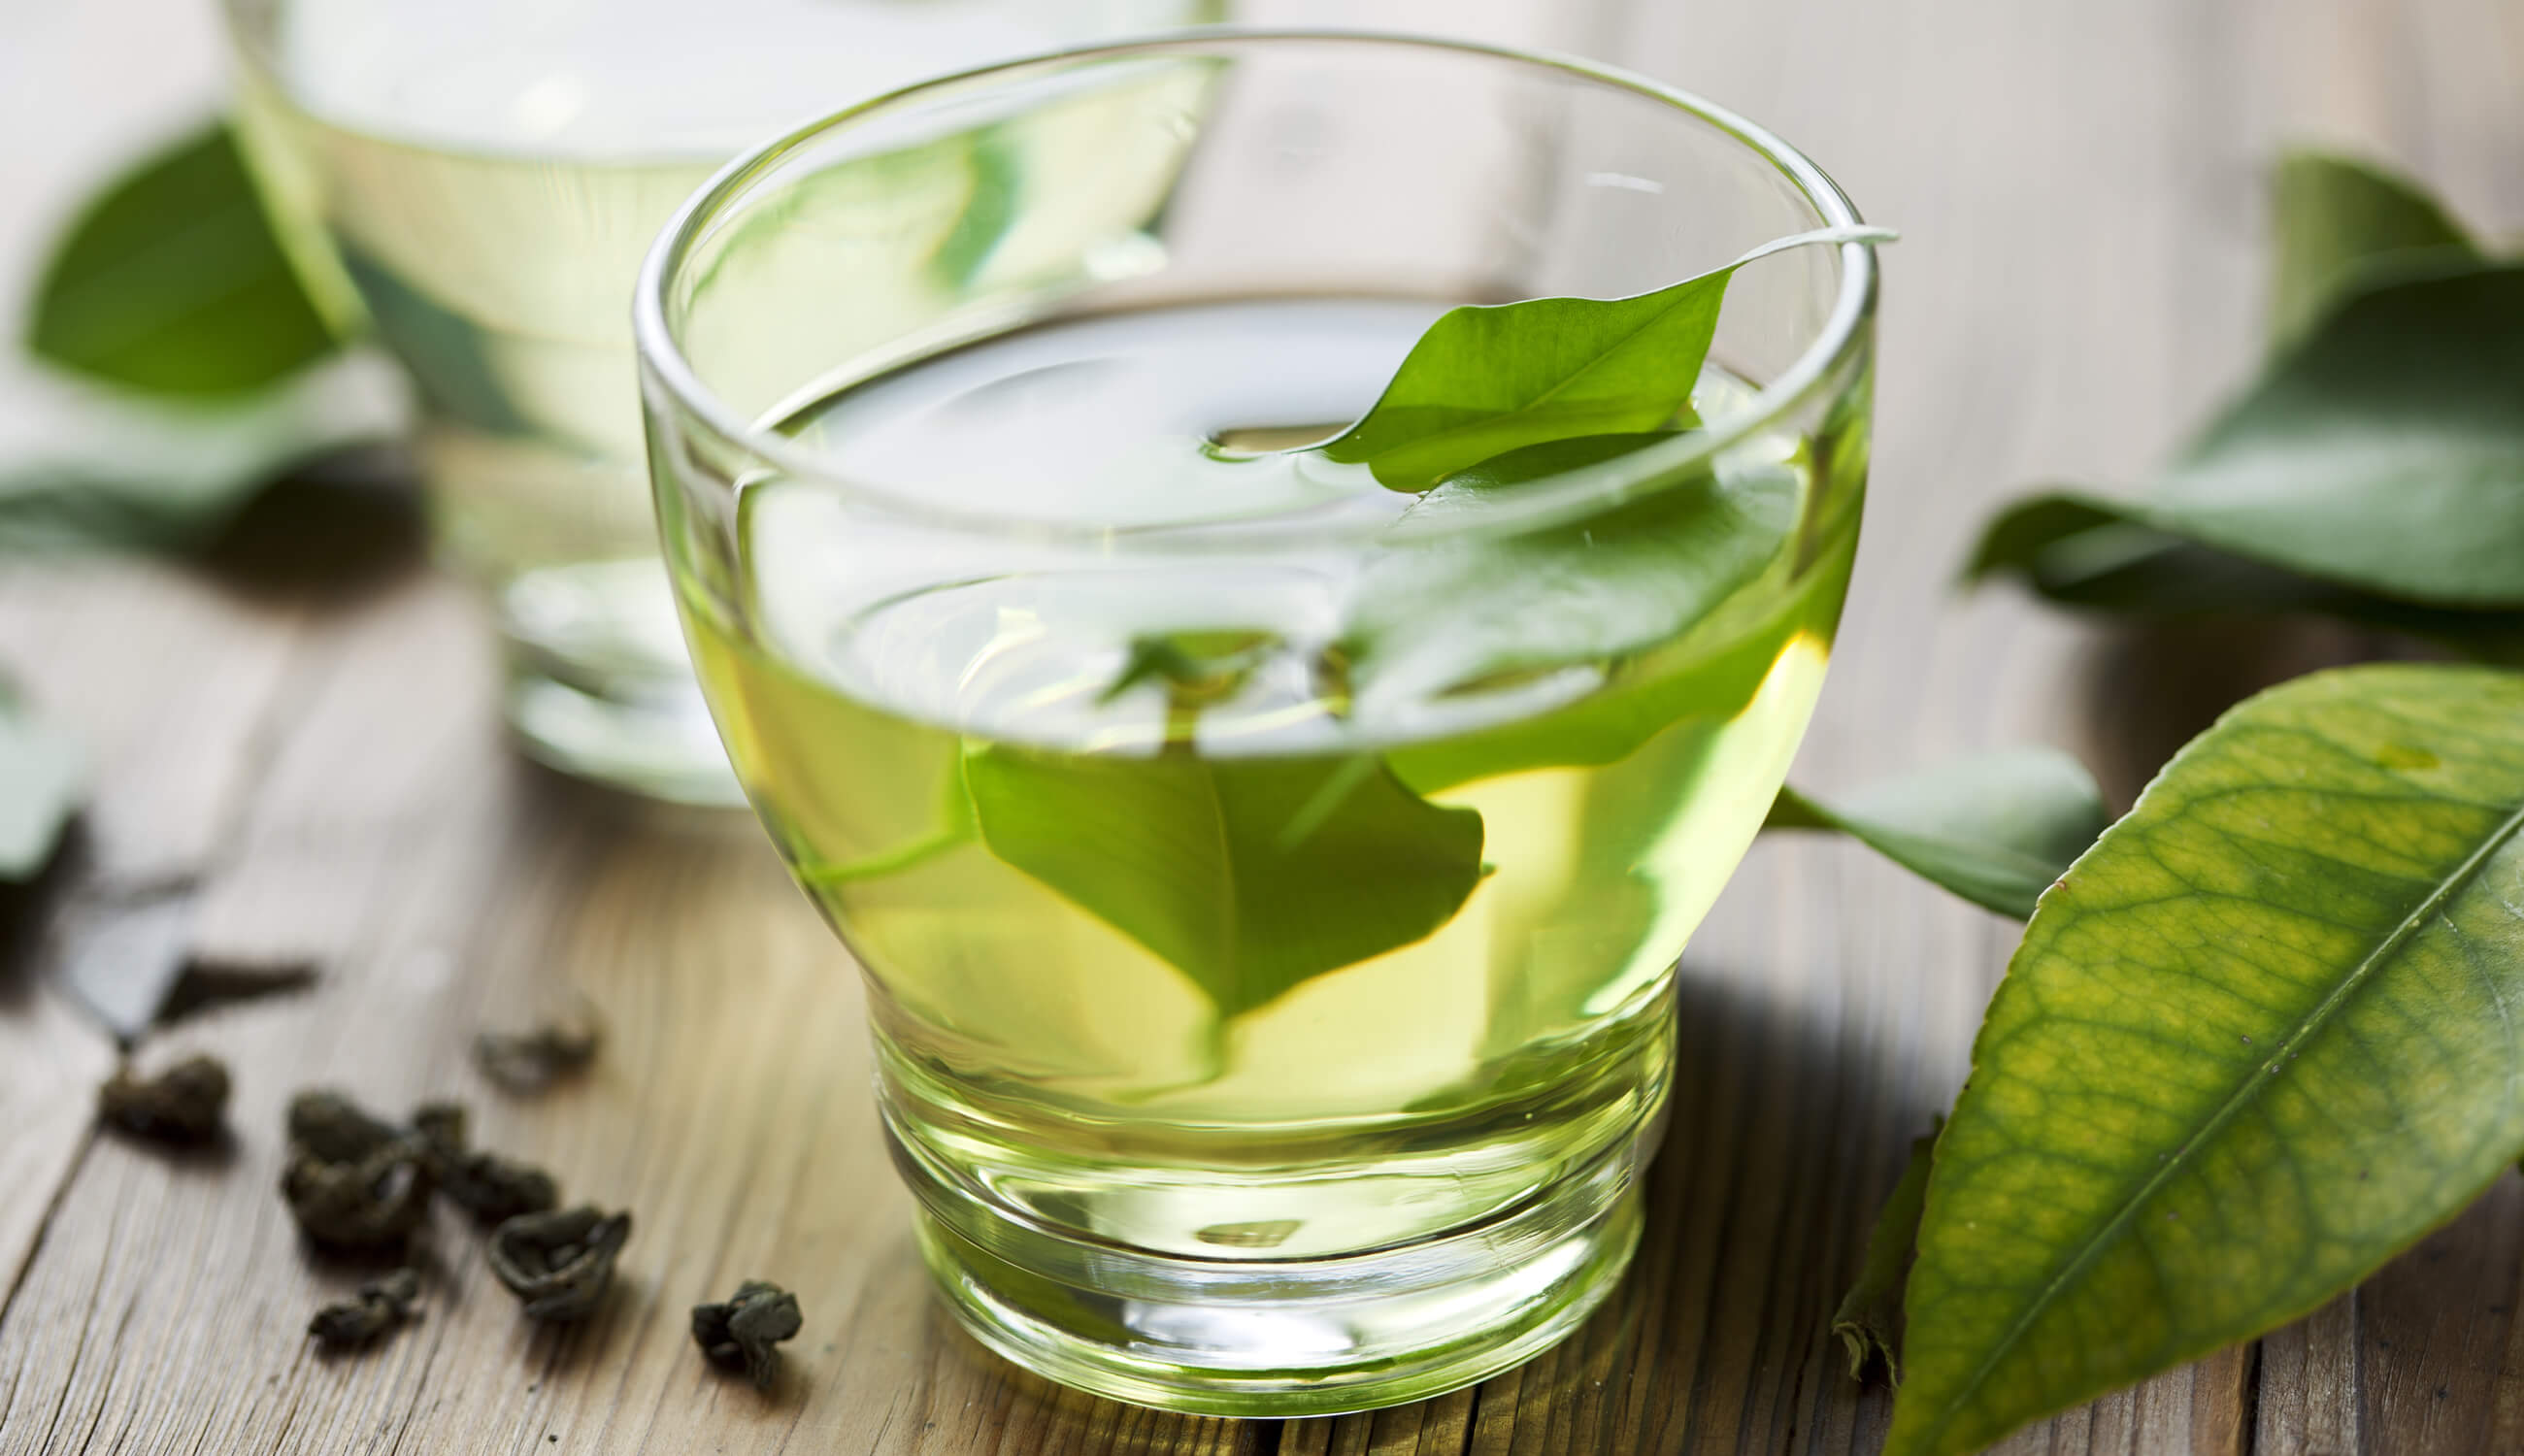 Green tea leaves in cup